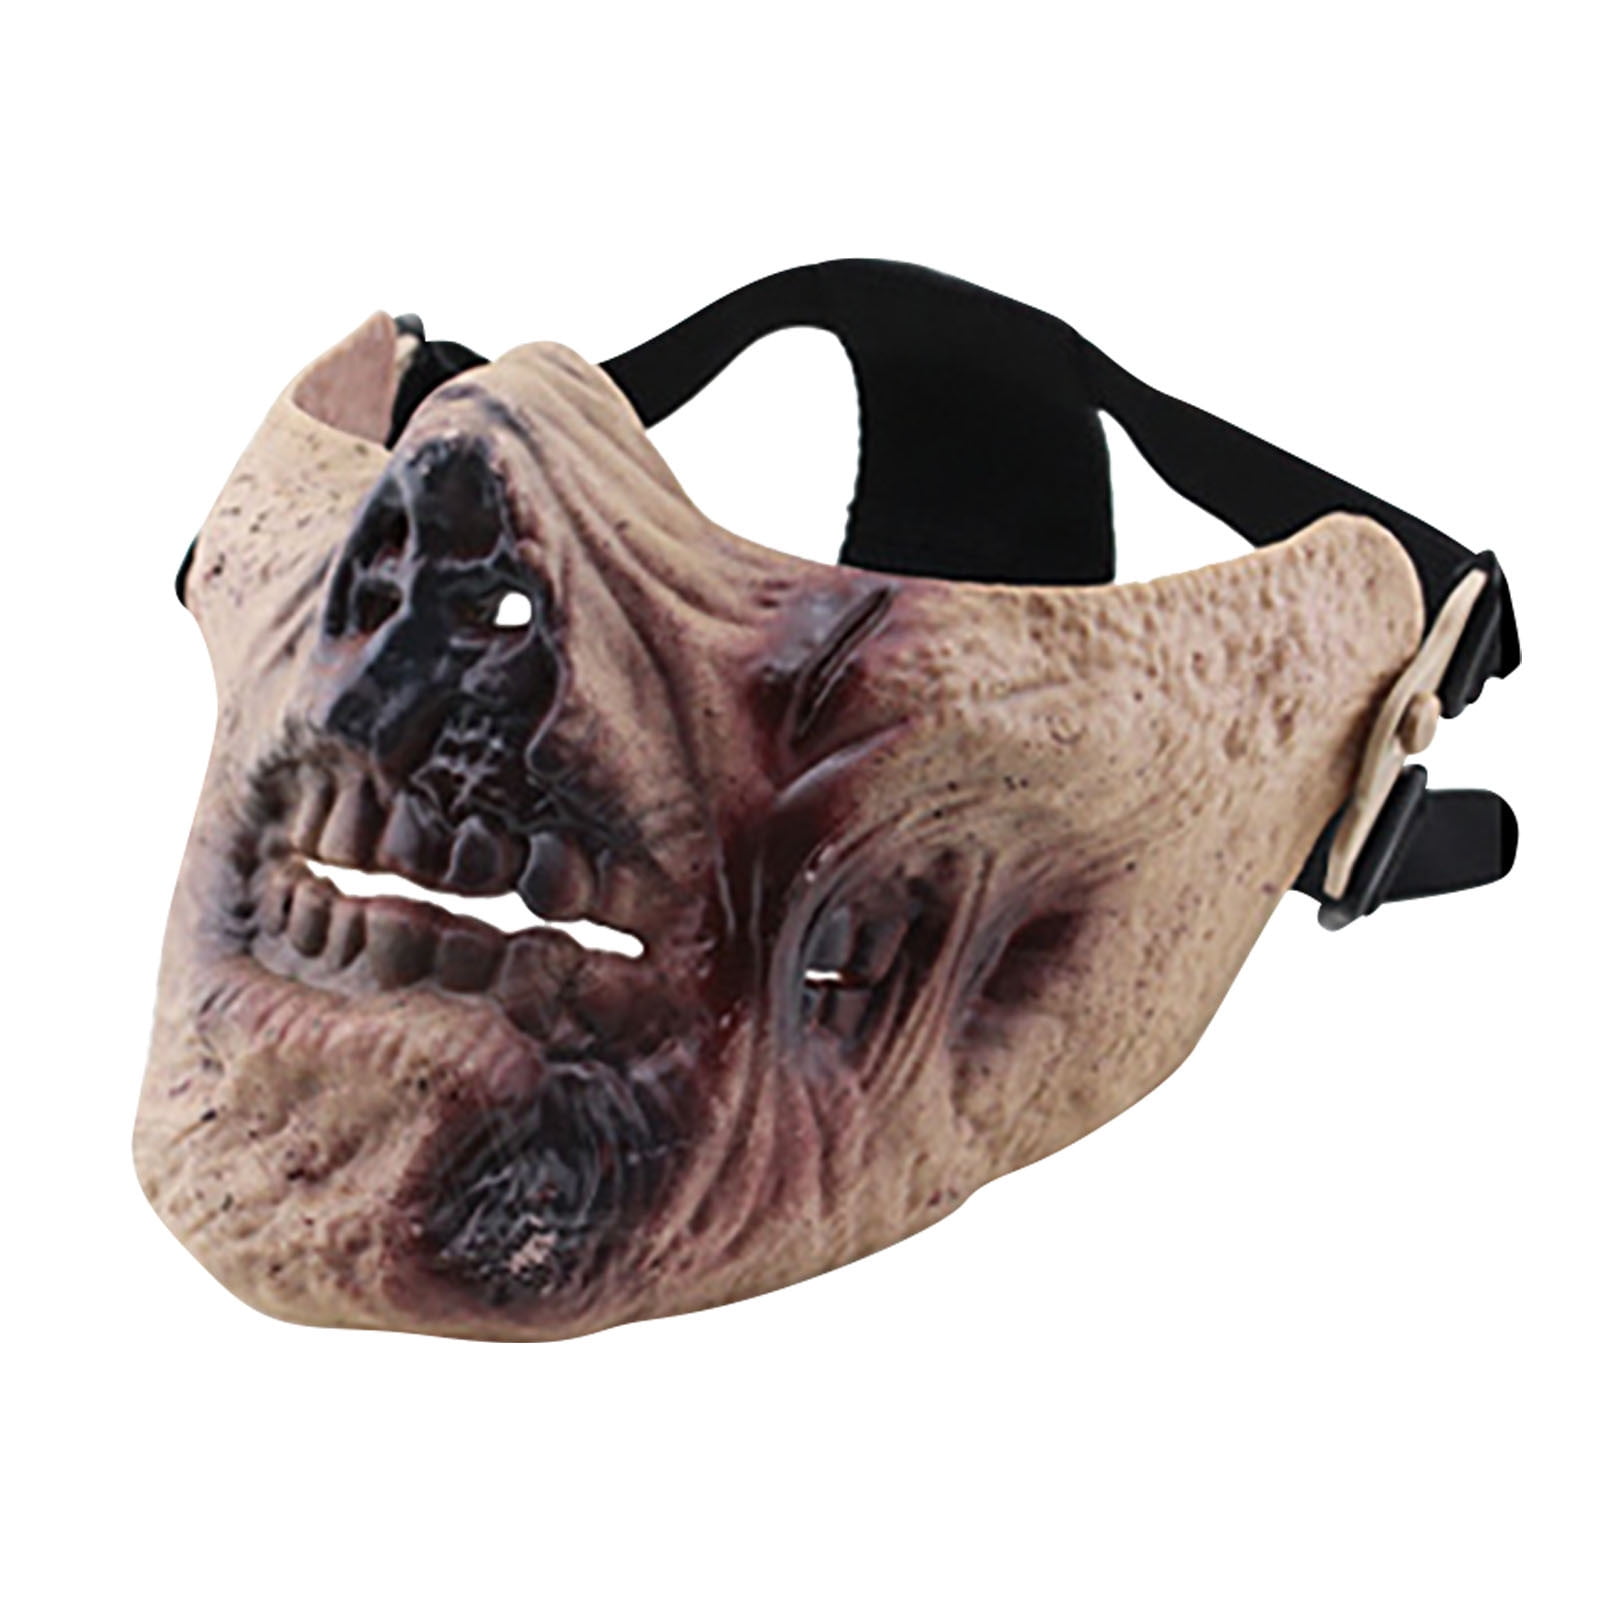 Halloween Scary Mask Halloween Mask Scary Spoof Mask - Walmart.com